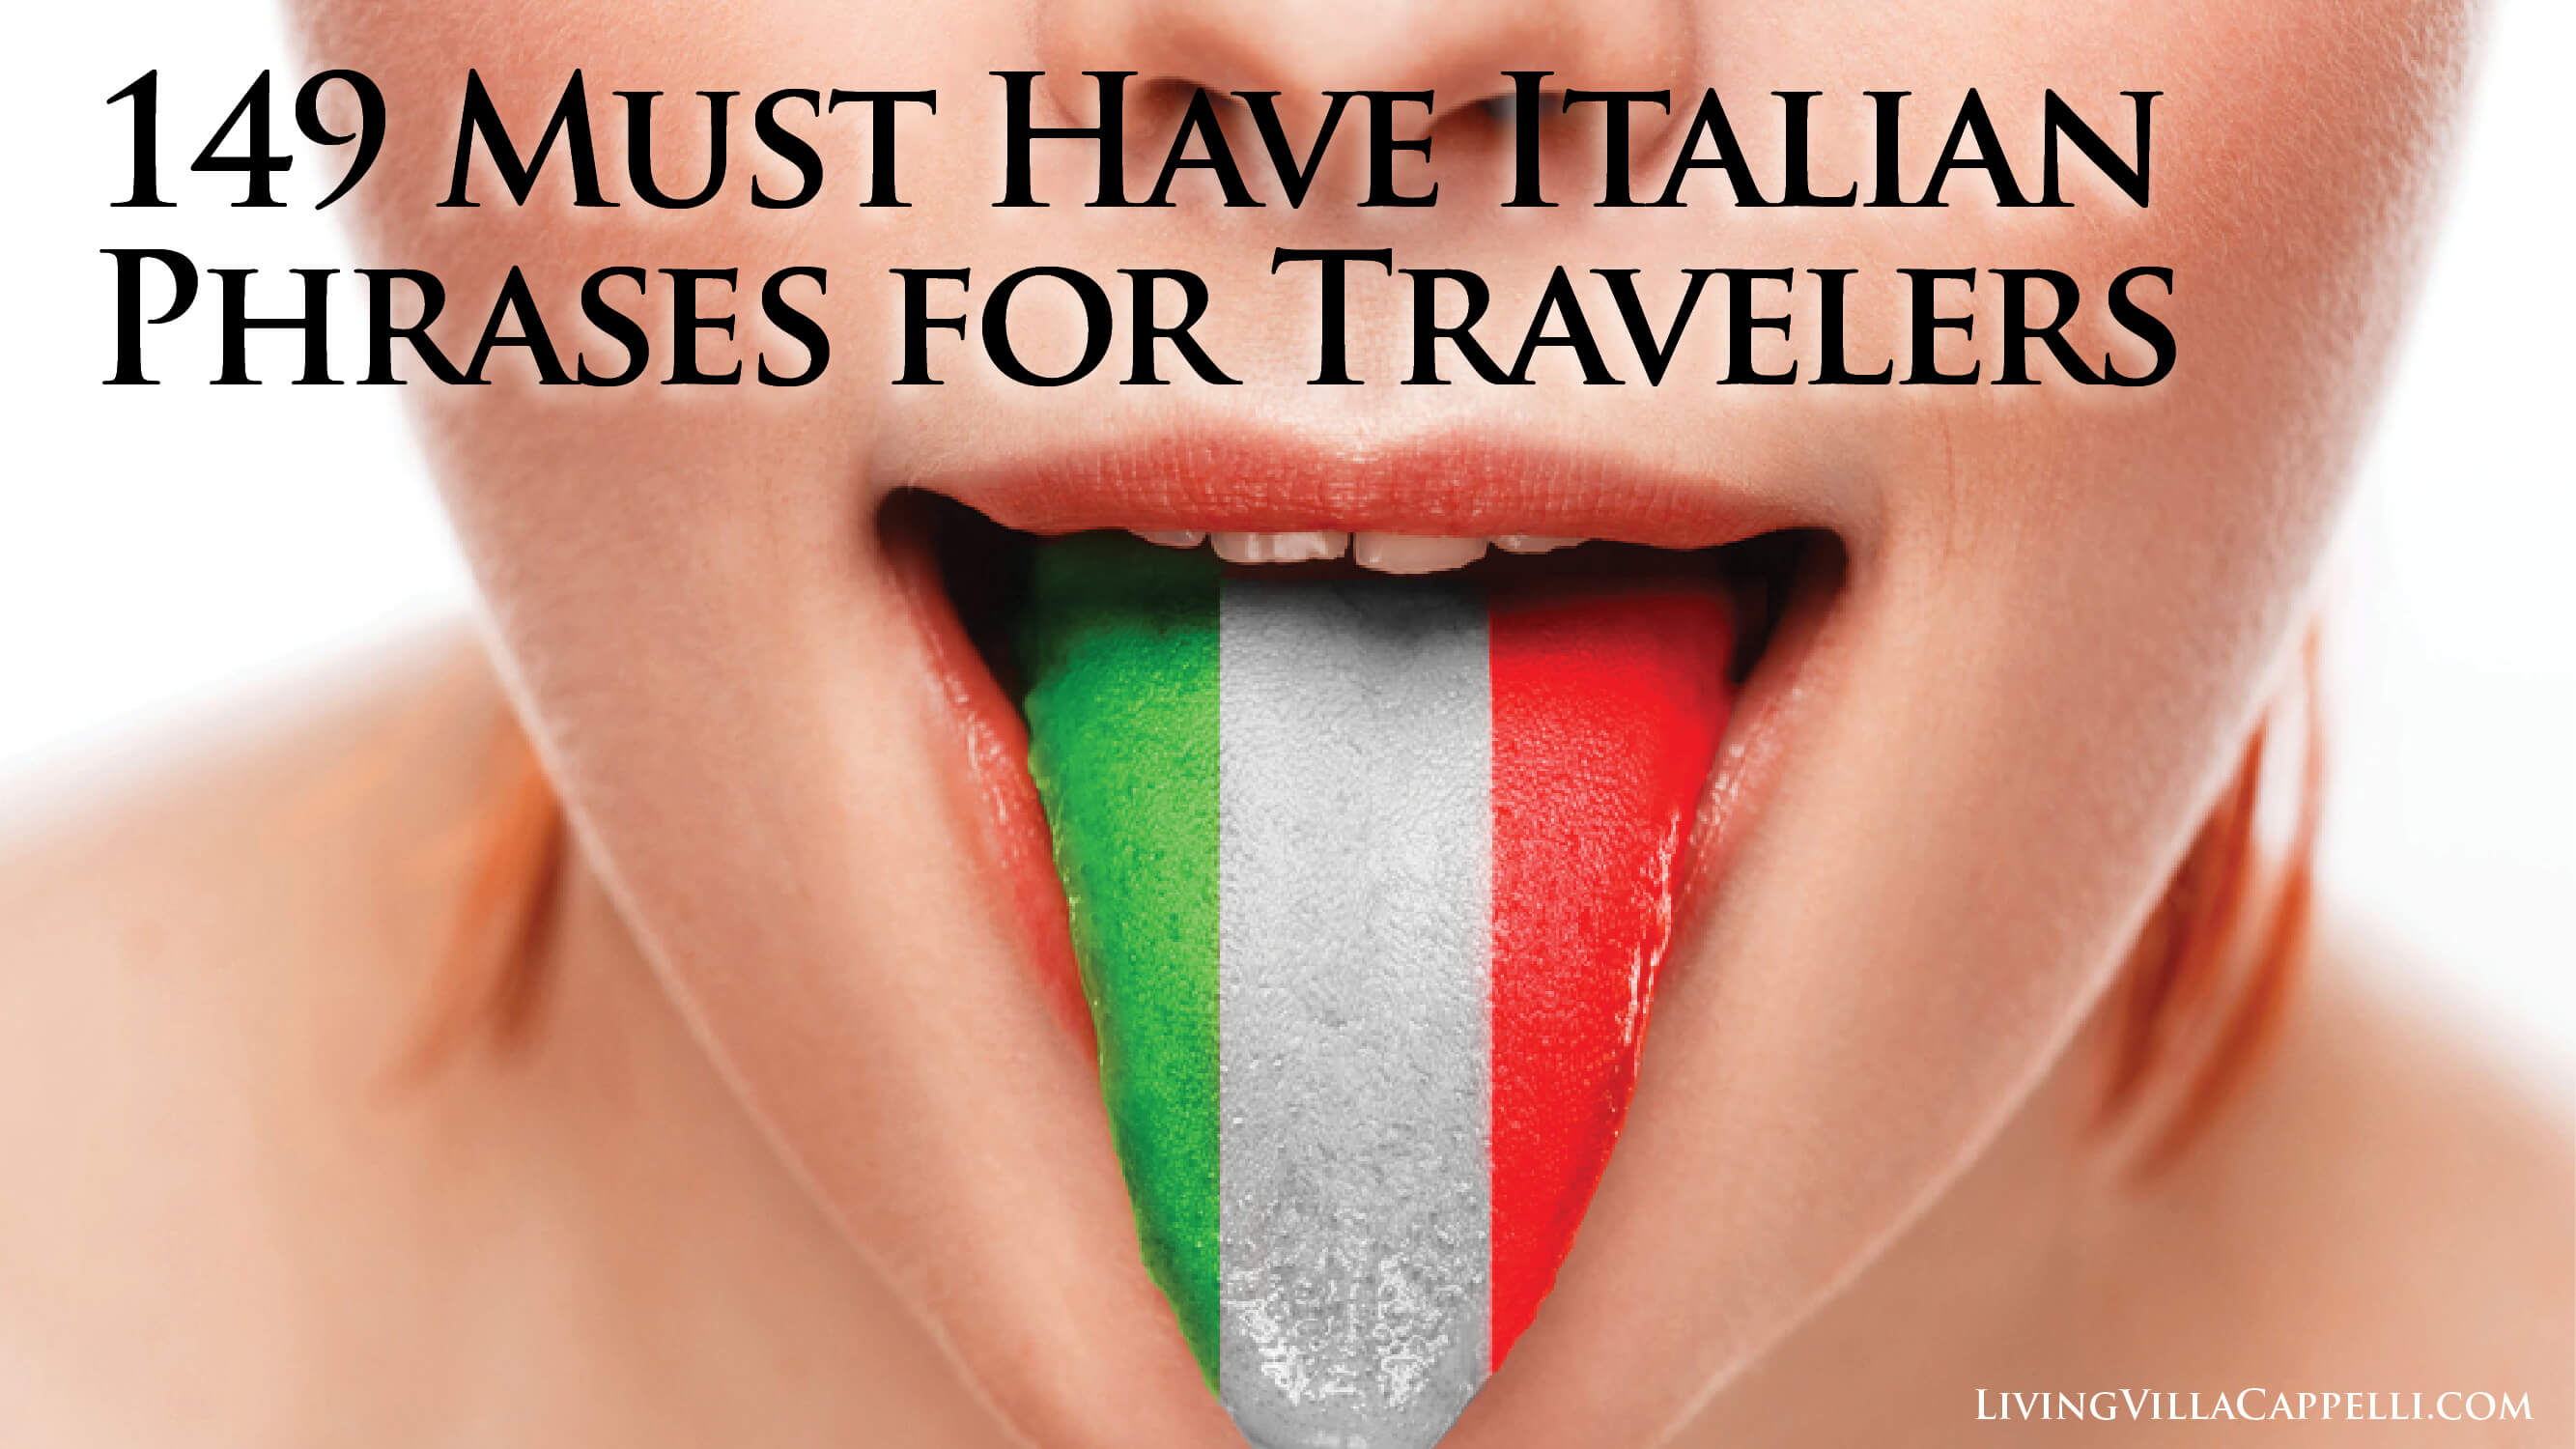 149 Must Have Italian Phrases for Travelers - Living Villa Cappelli